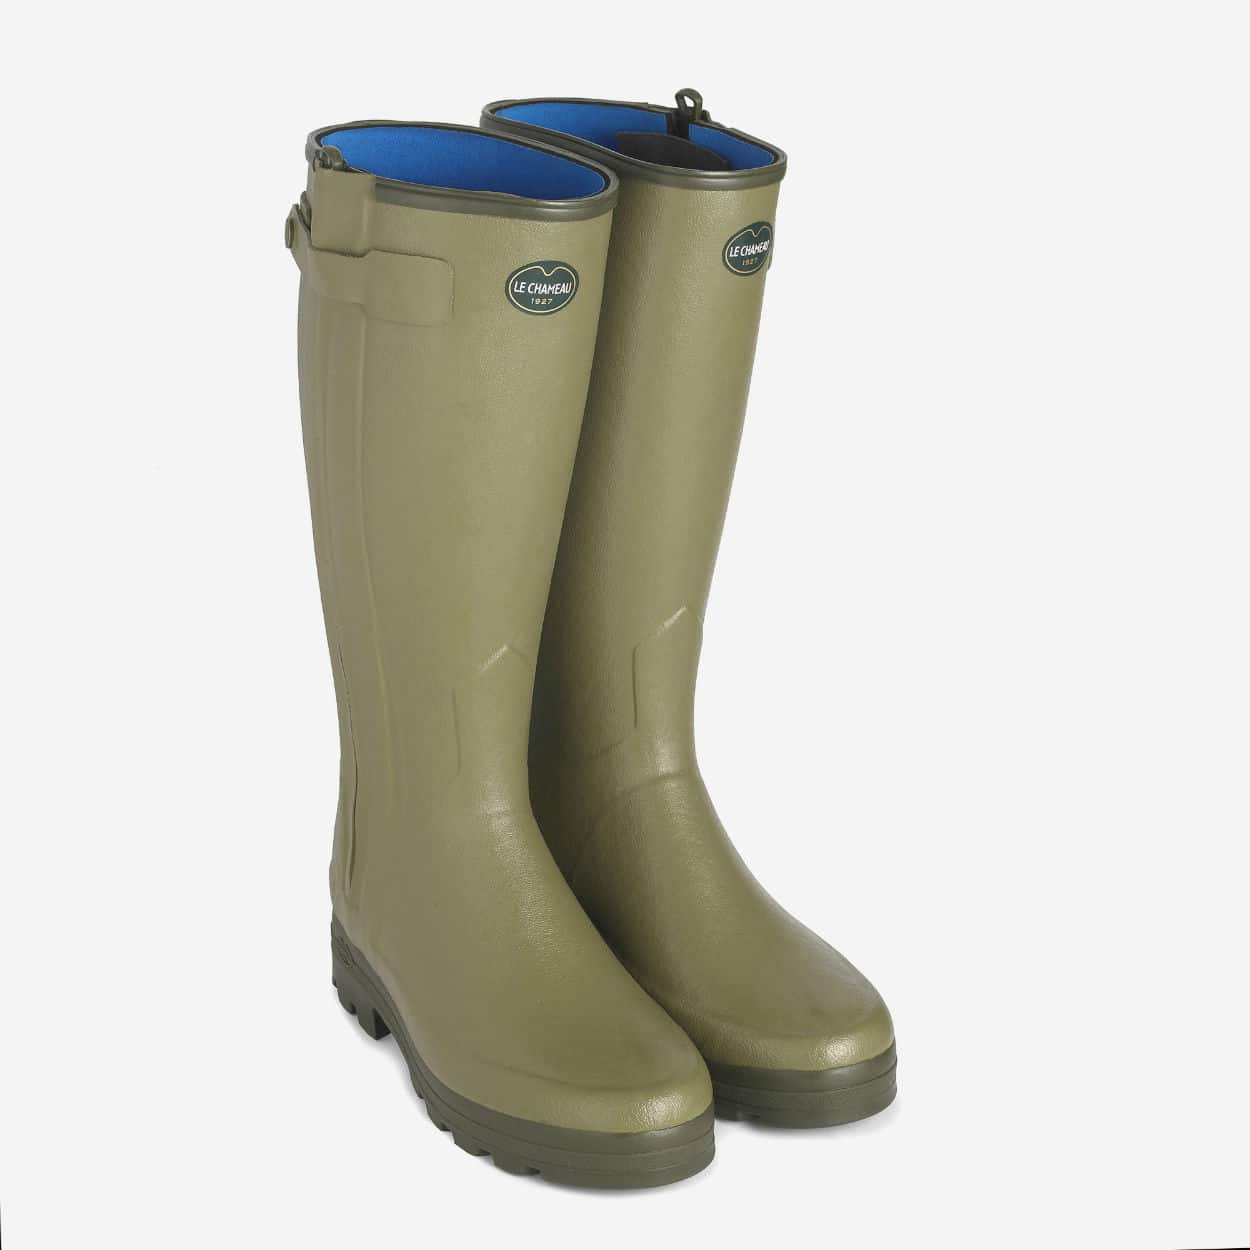 https://www.countrywaygunshop.co.uk/wp-content/uploads/2013/12/Le-Chameau-Chasseur-Neoprene-Zip-Wellington-Boots.jpg